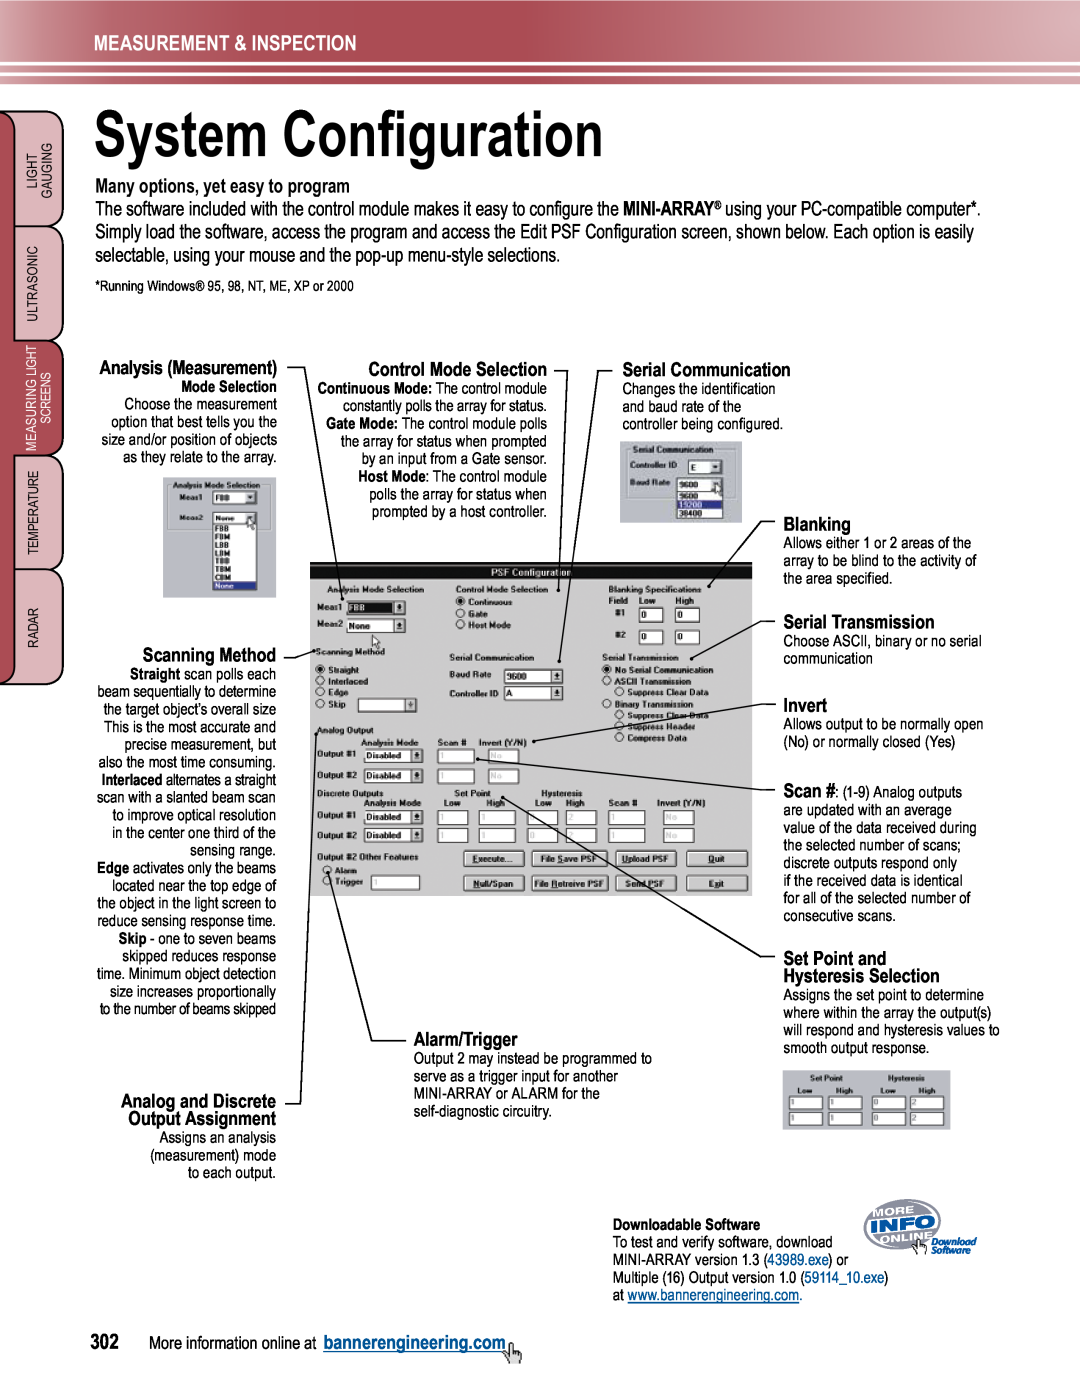 Banner L-GAGE manual System Configuration, Measurement & Inspection, More information online at bannerengineering.com 